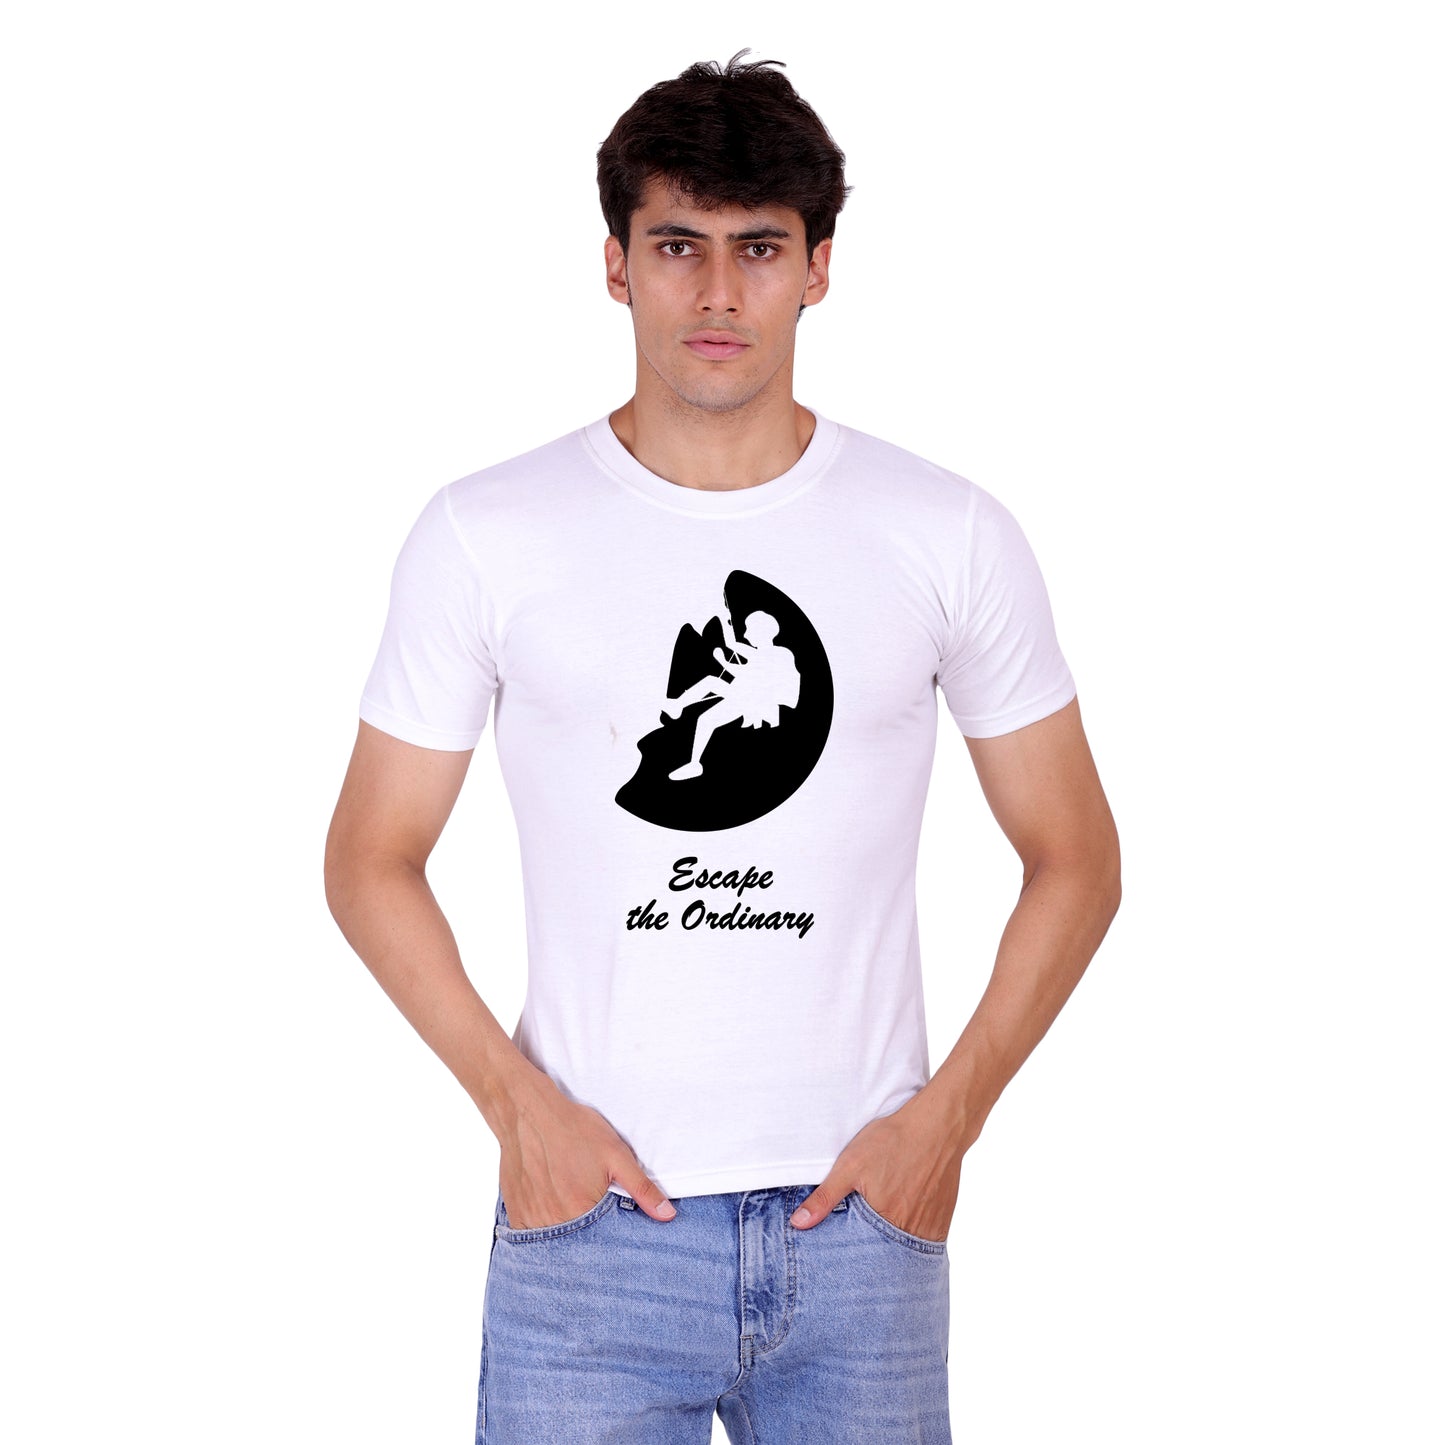 Escape the Ordinary cotton T-shirt | T130